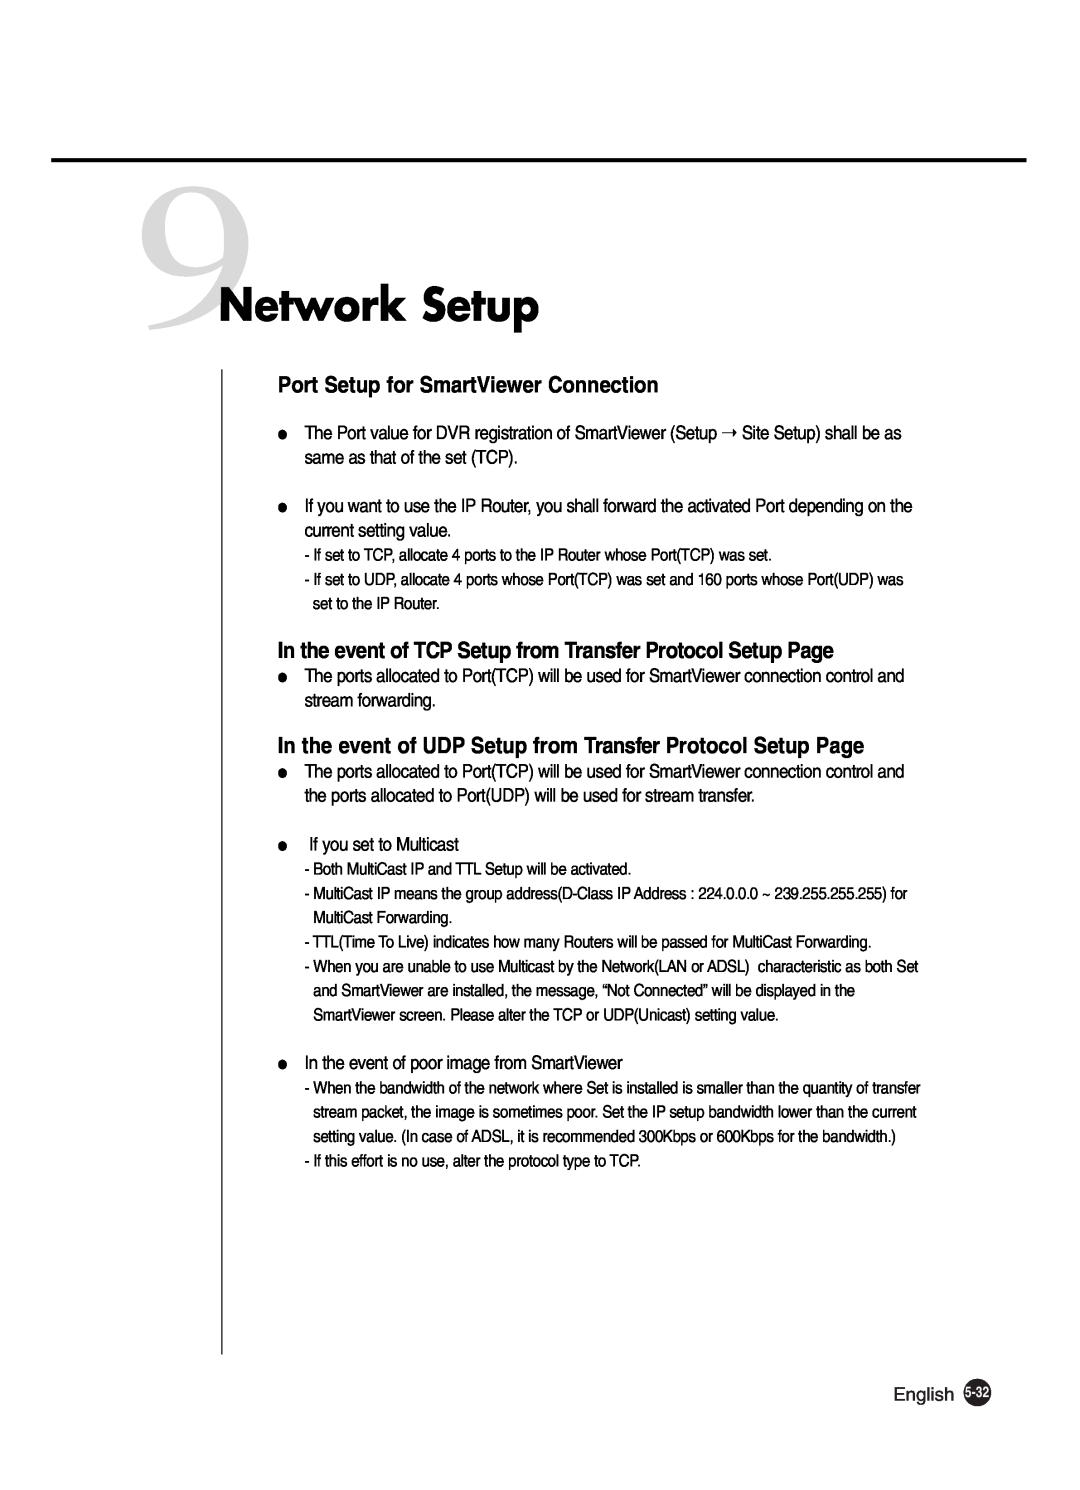 Samsung SHR-2040P250, SHR-2042P250 manual 9Network Setup, Port Setup for SmartViewer Connection, English 